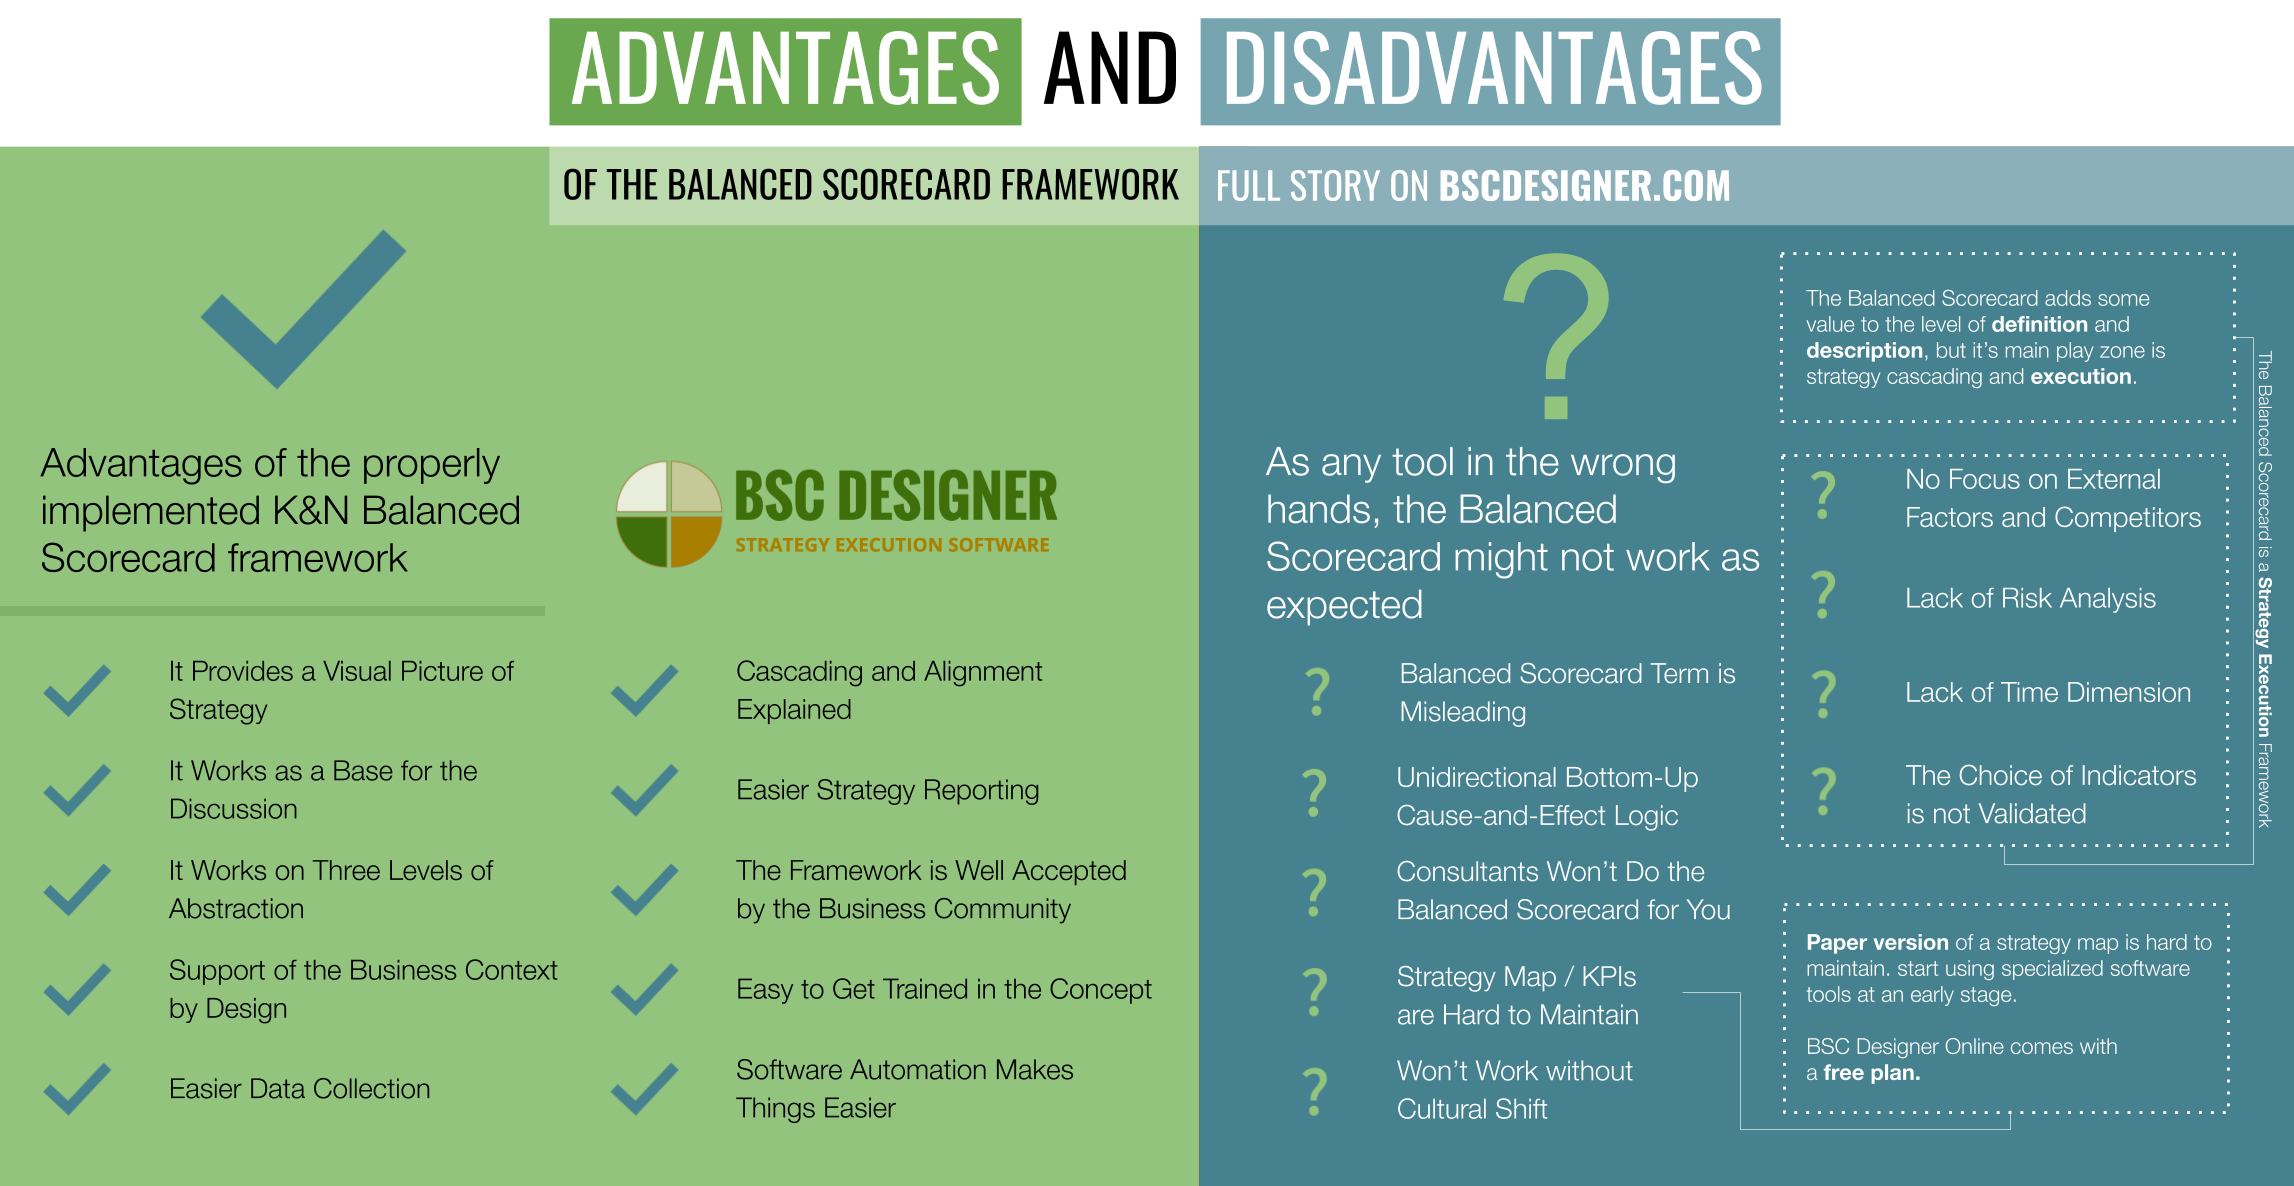 Advantages and Disadvantages of the Balanced Scorecard Framework